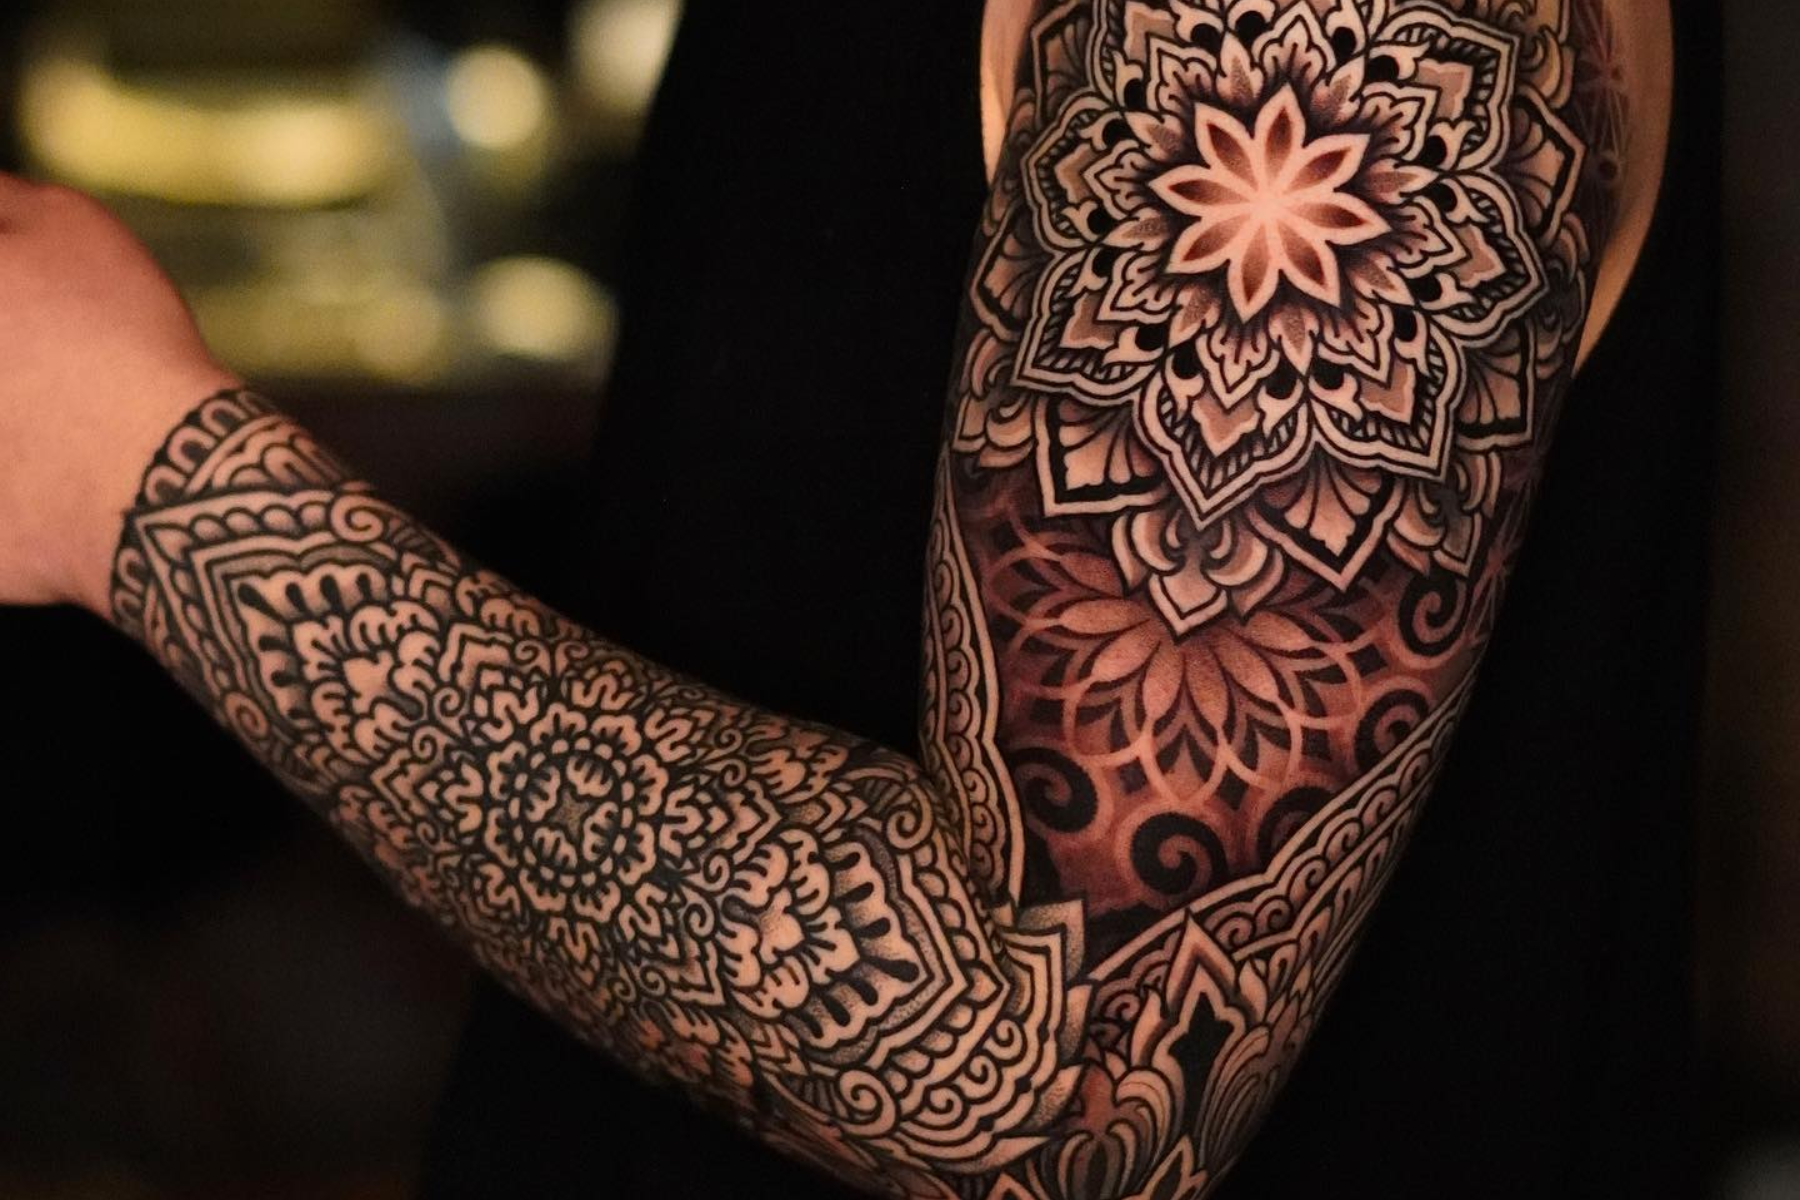 Exquisite Ornamental Tattoos by Adrianna Sak - KickAss Things